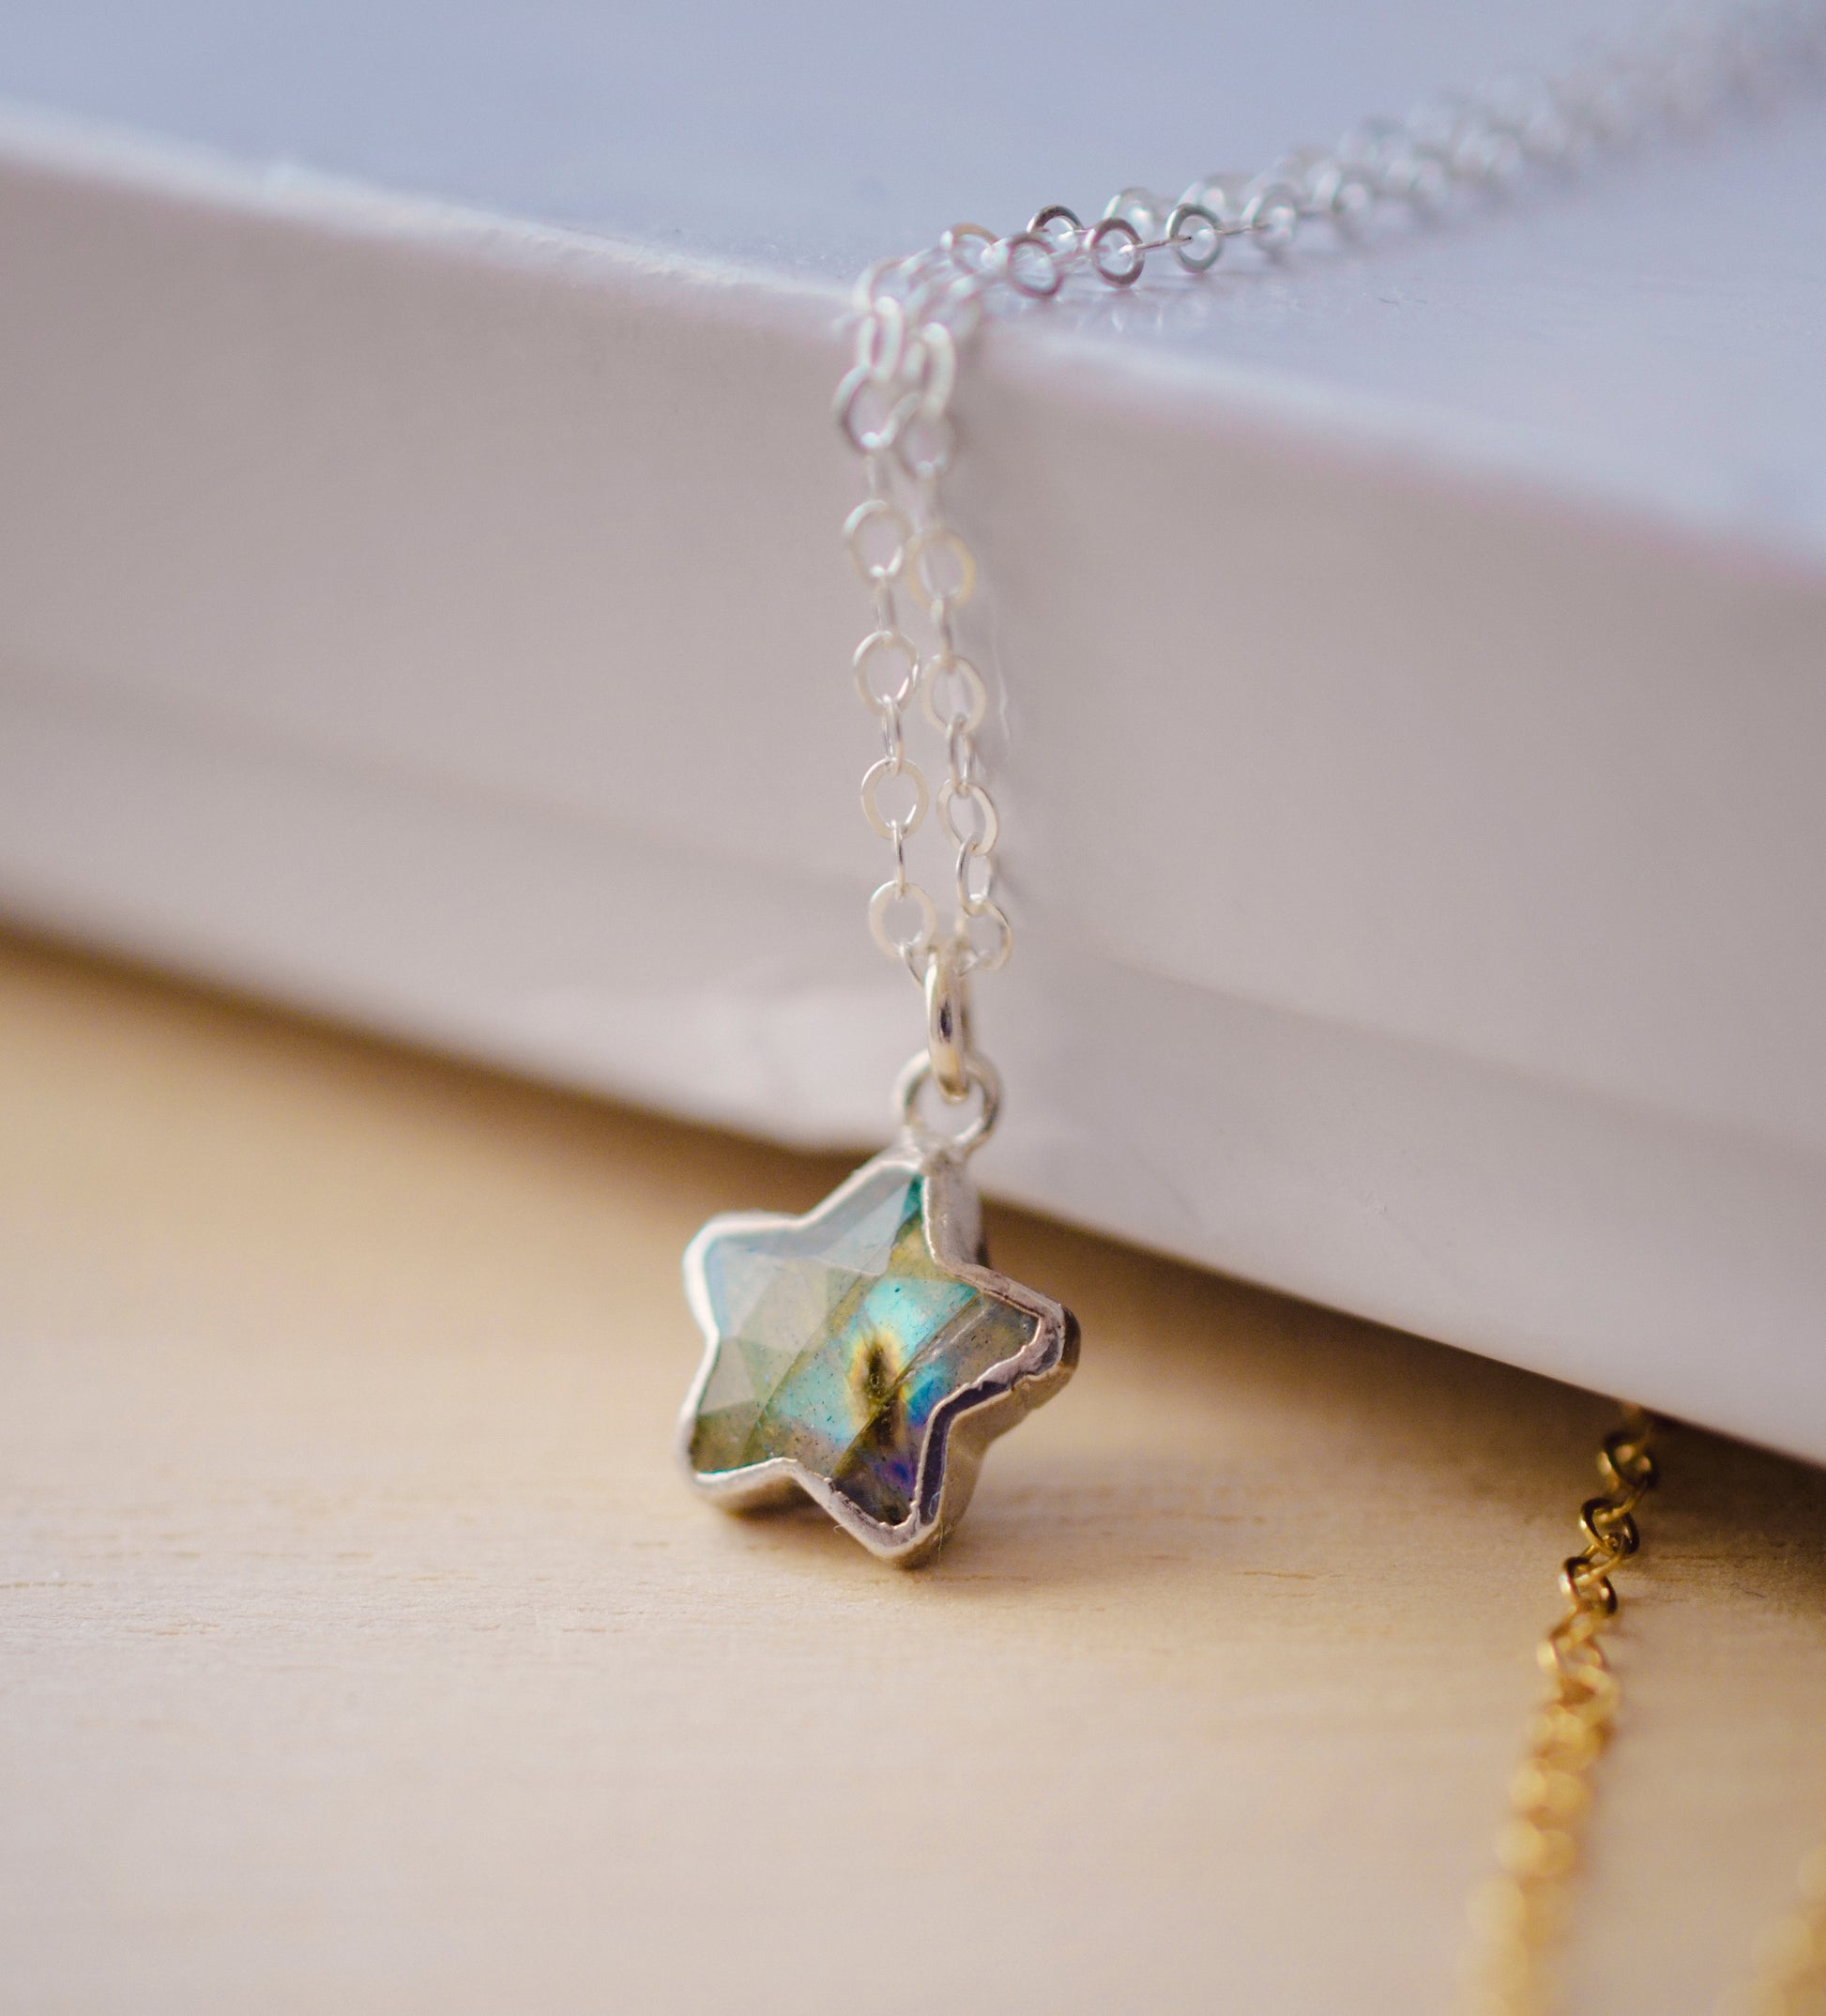 Labradorite star pendant in silver on a simple chain.